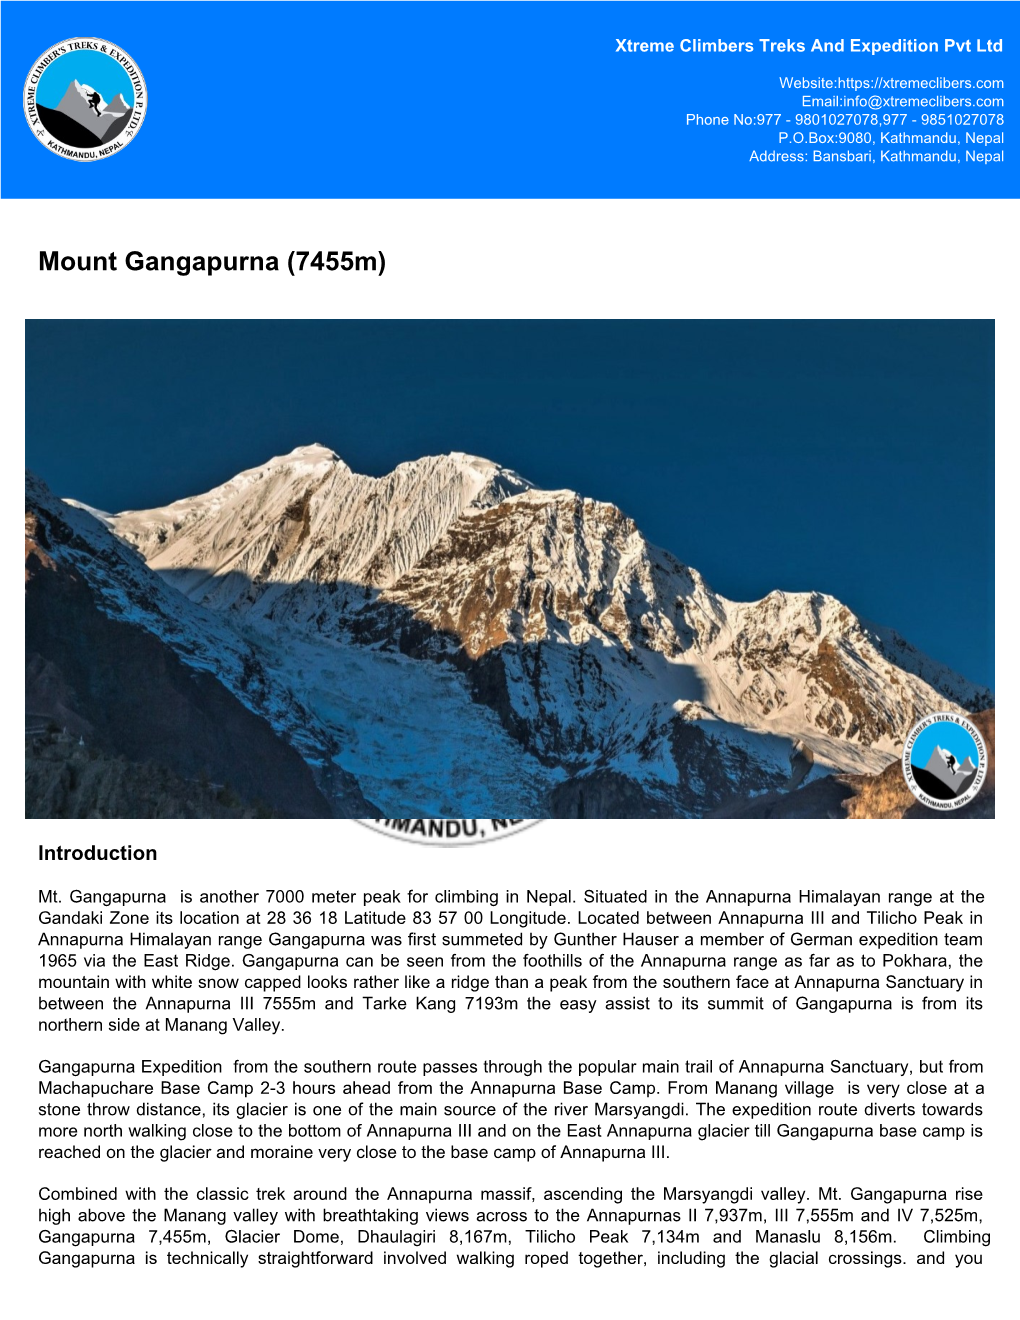 Mount Gangapurna (7455M)